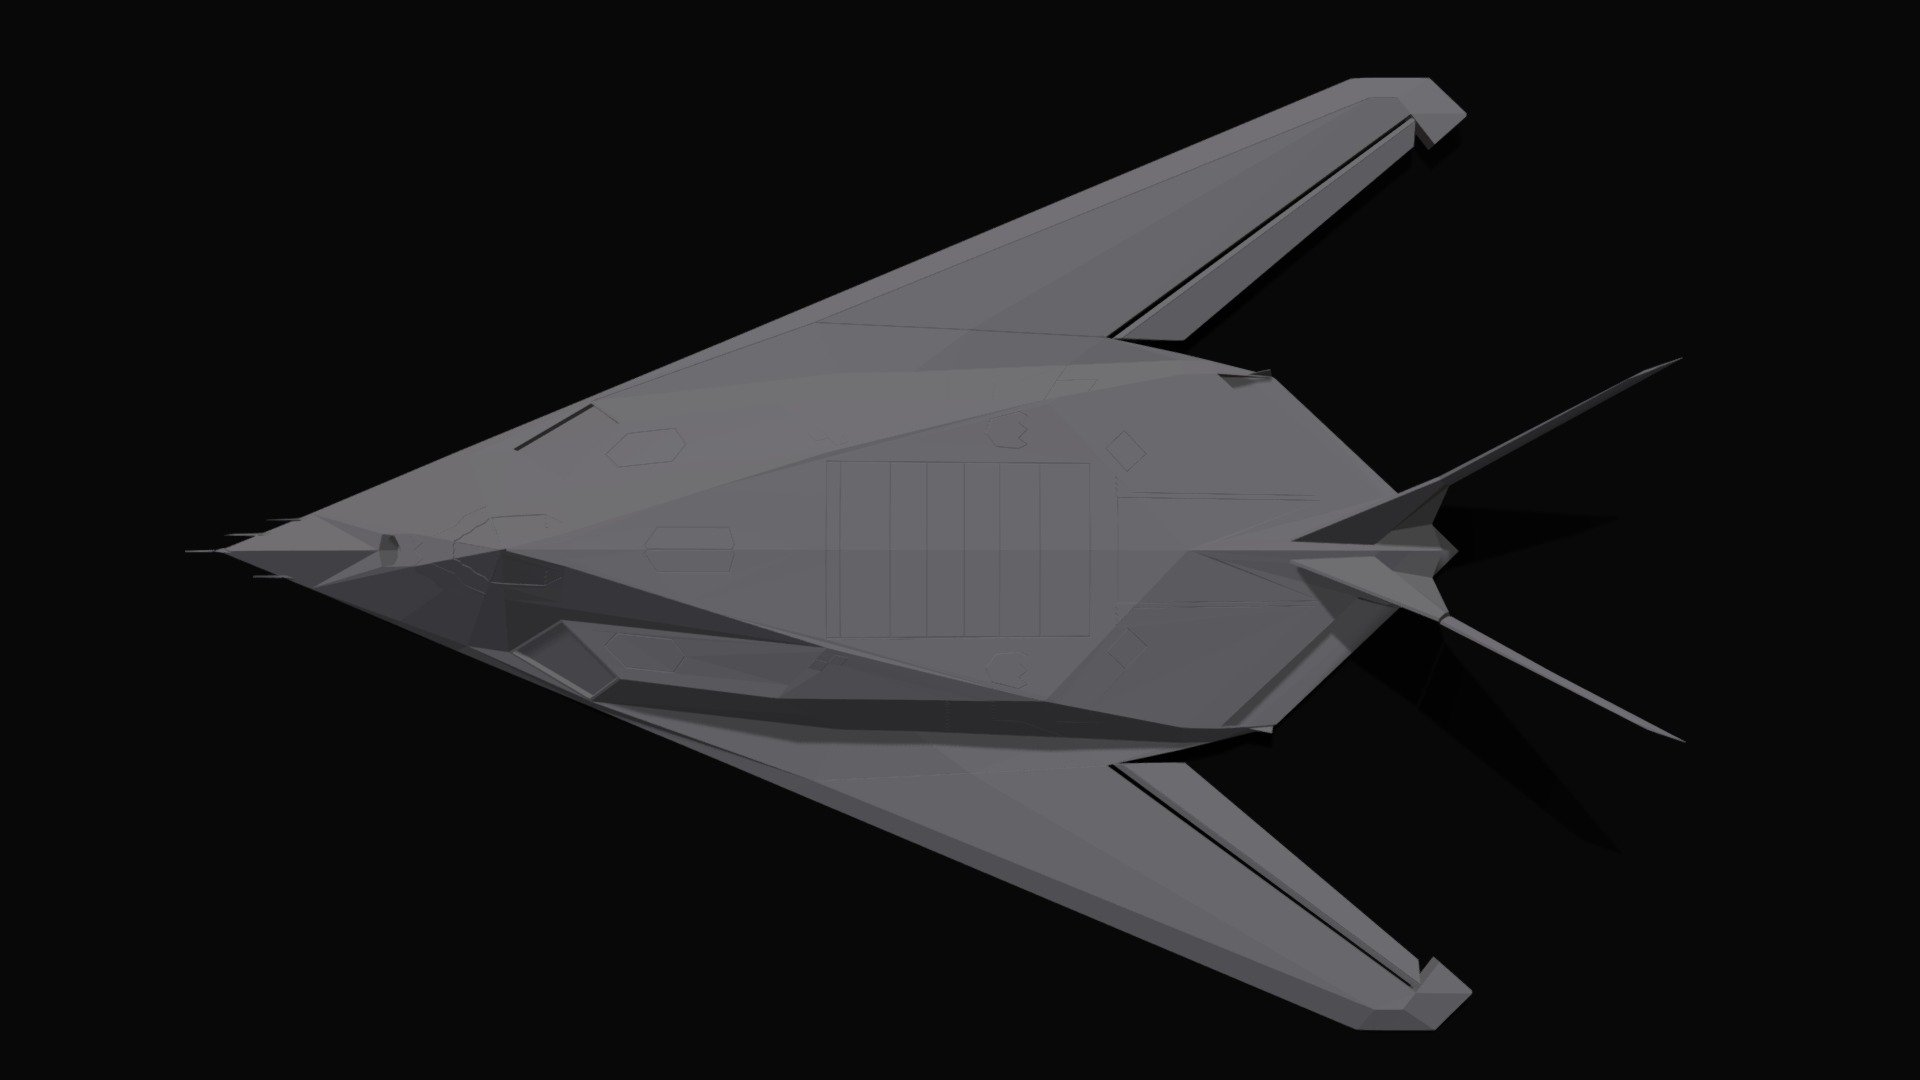 Lockheed F-117 Nighthawk Stealth fighter bomber